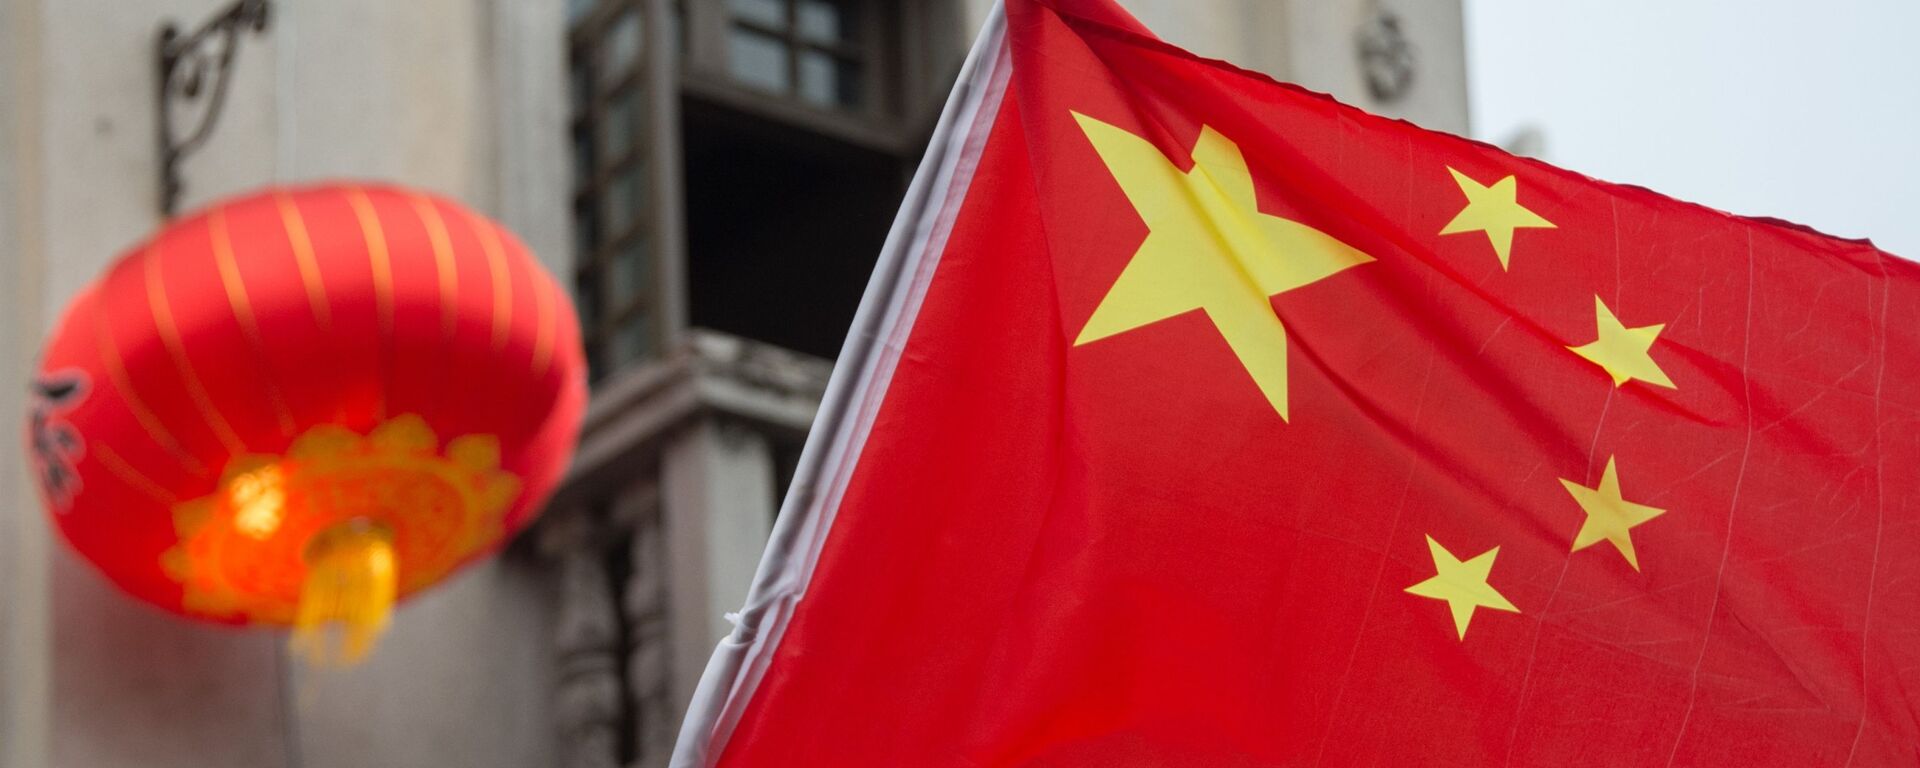 La bandera de China - Sputnik Mundo, 1920, 19.04.2021